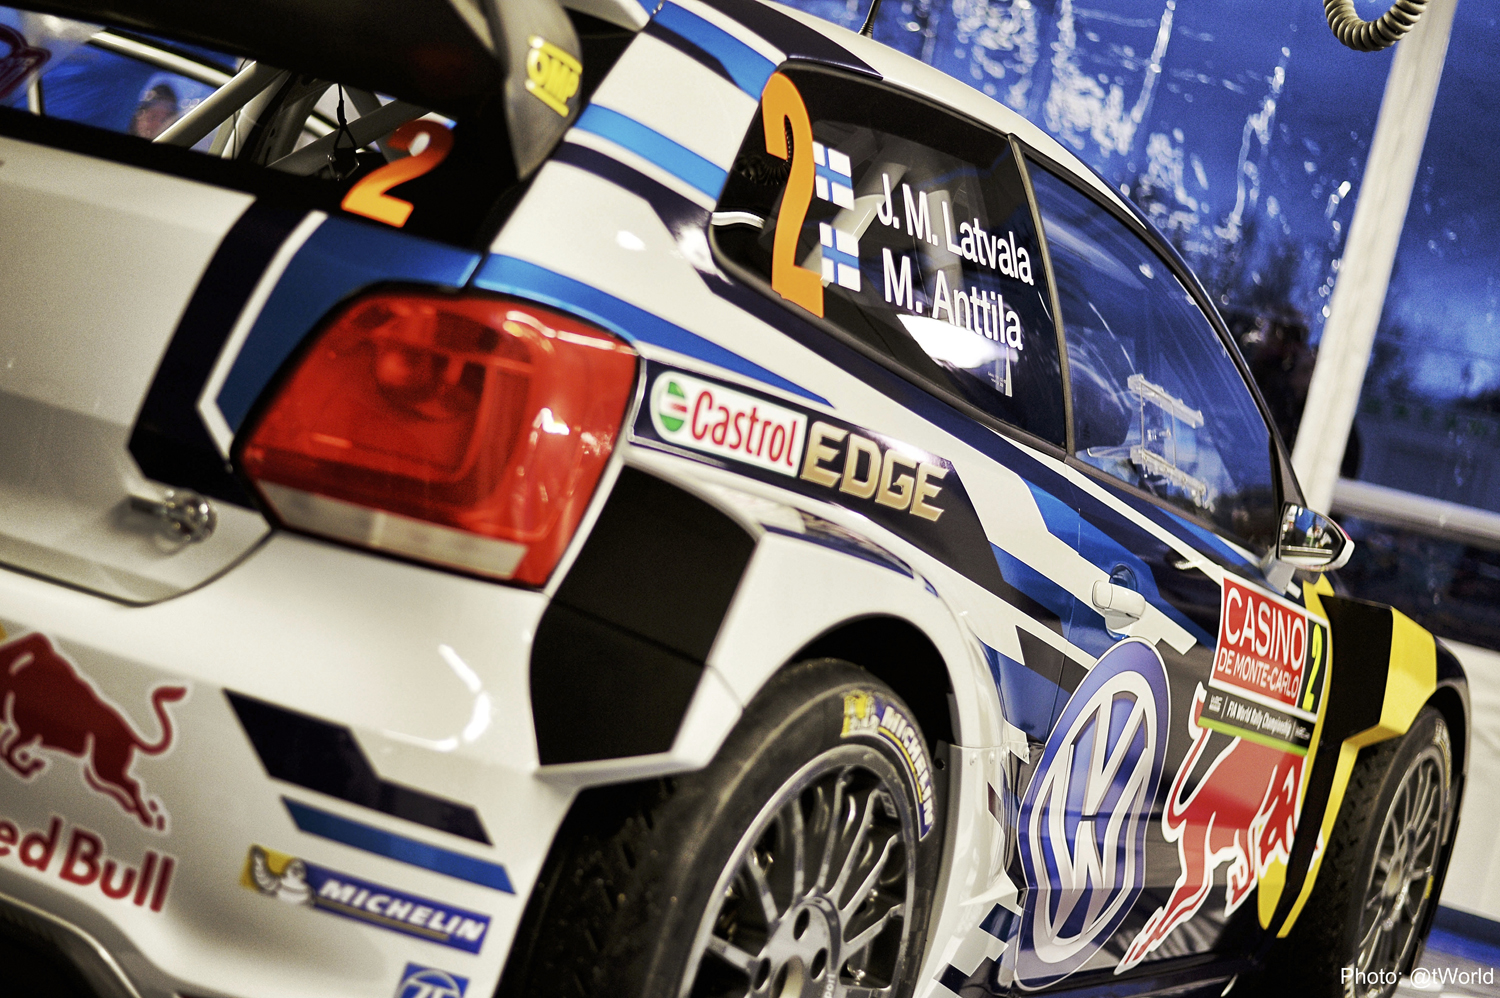 FIA WORLD RALLY CHAMPIONSHIP 2014 – WRC Rallye Monte Carlo